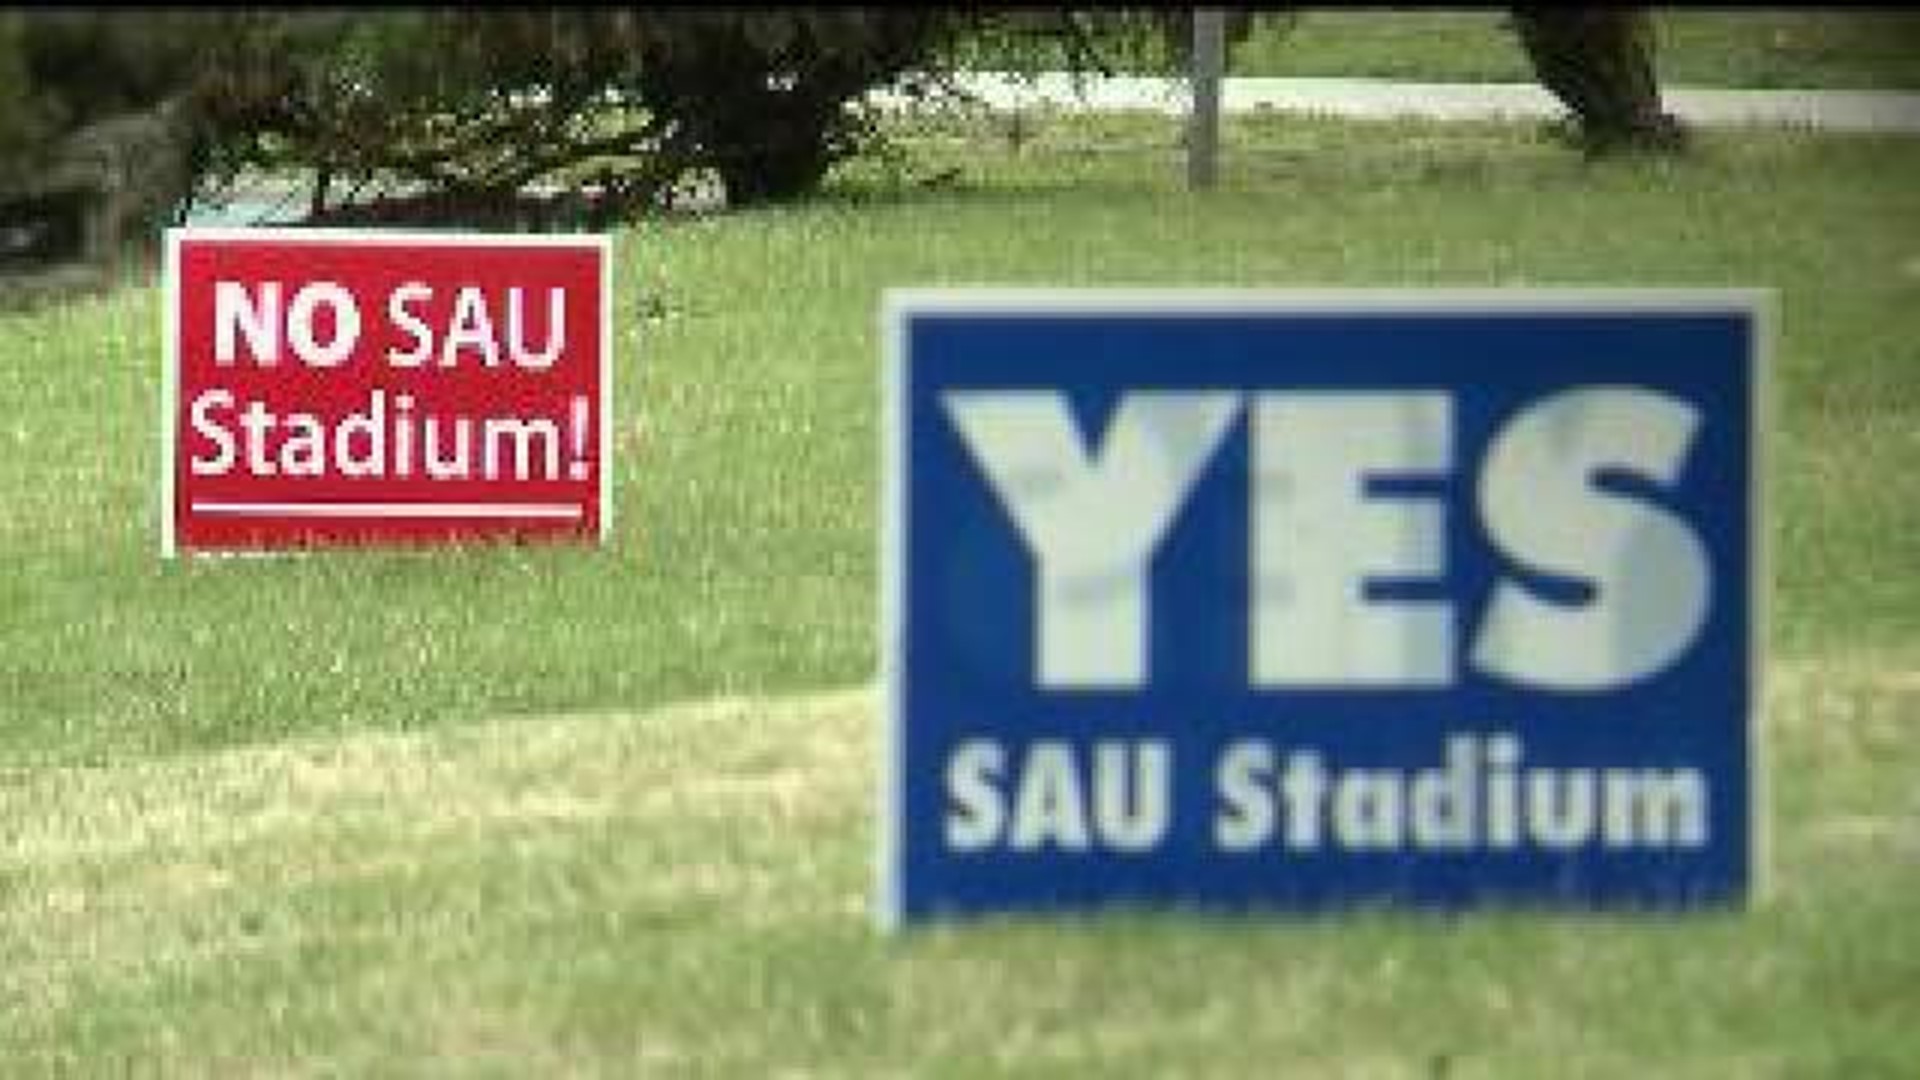 Mayor Gluba vetoes SAU stadium zoning